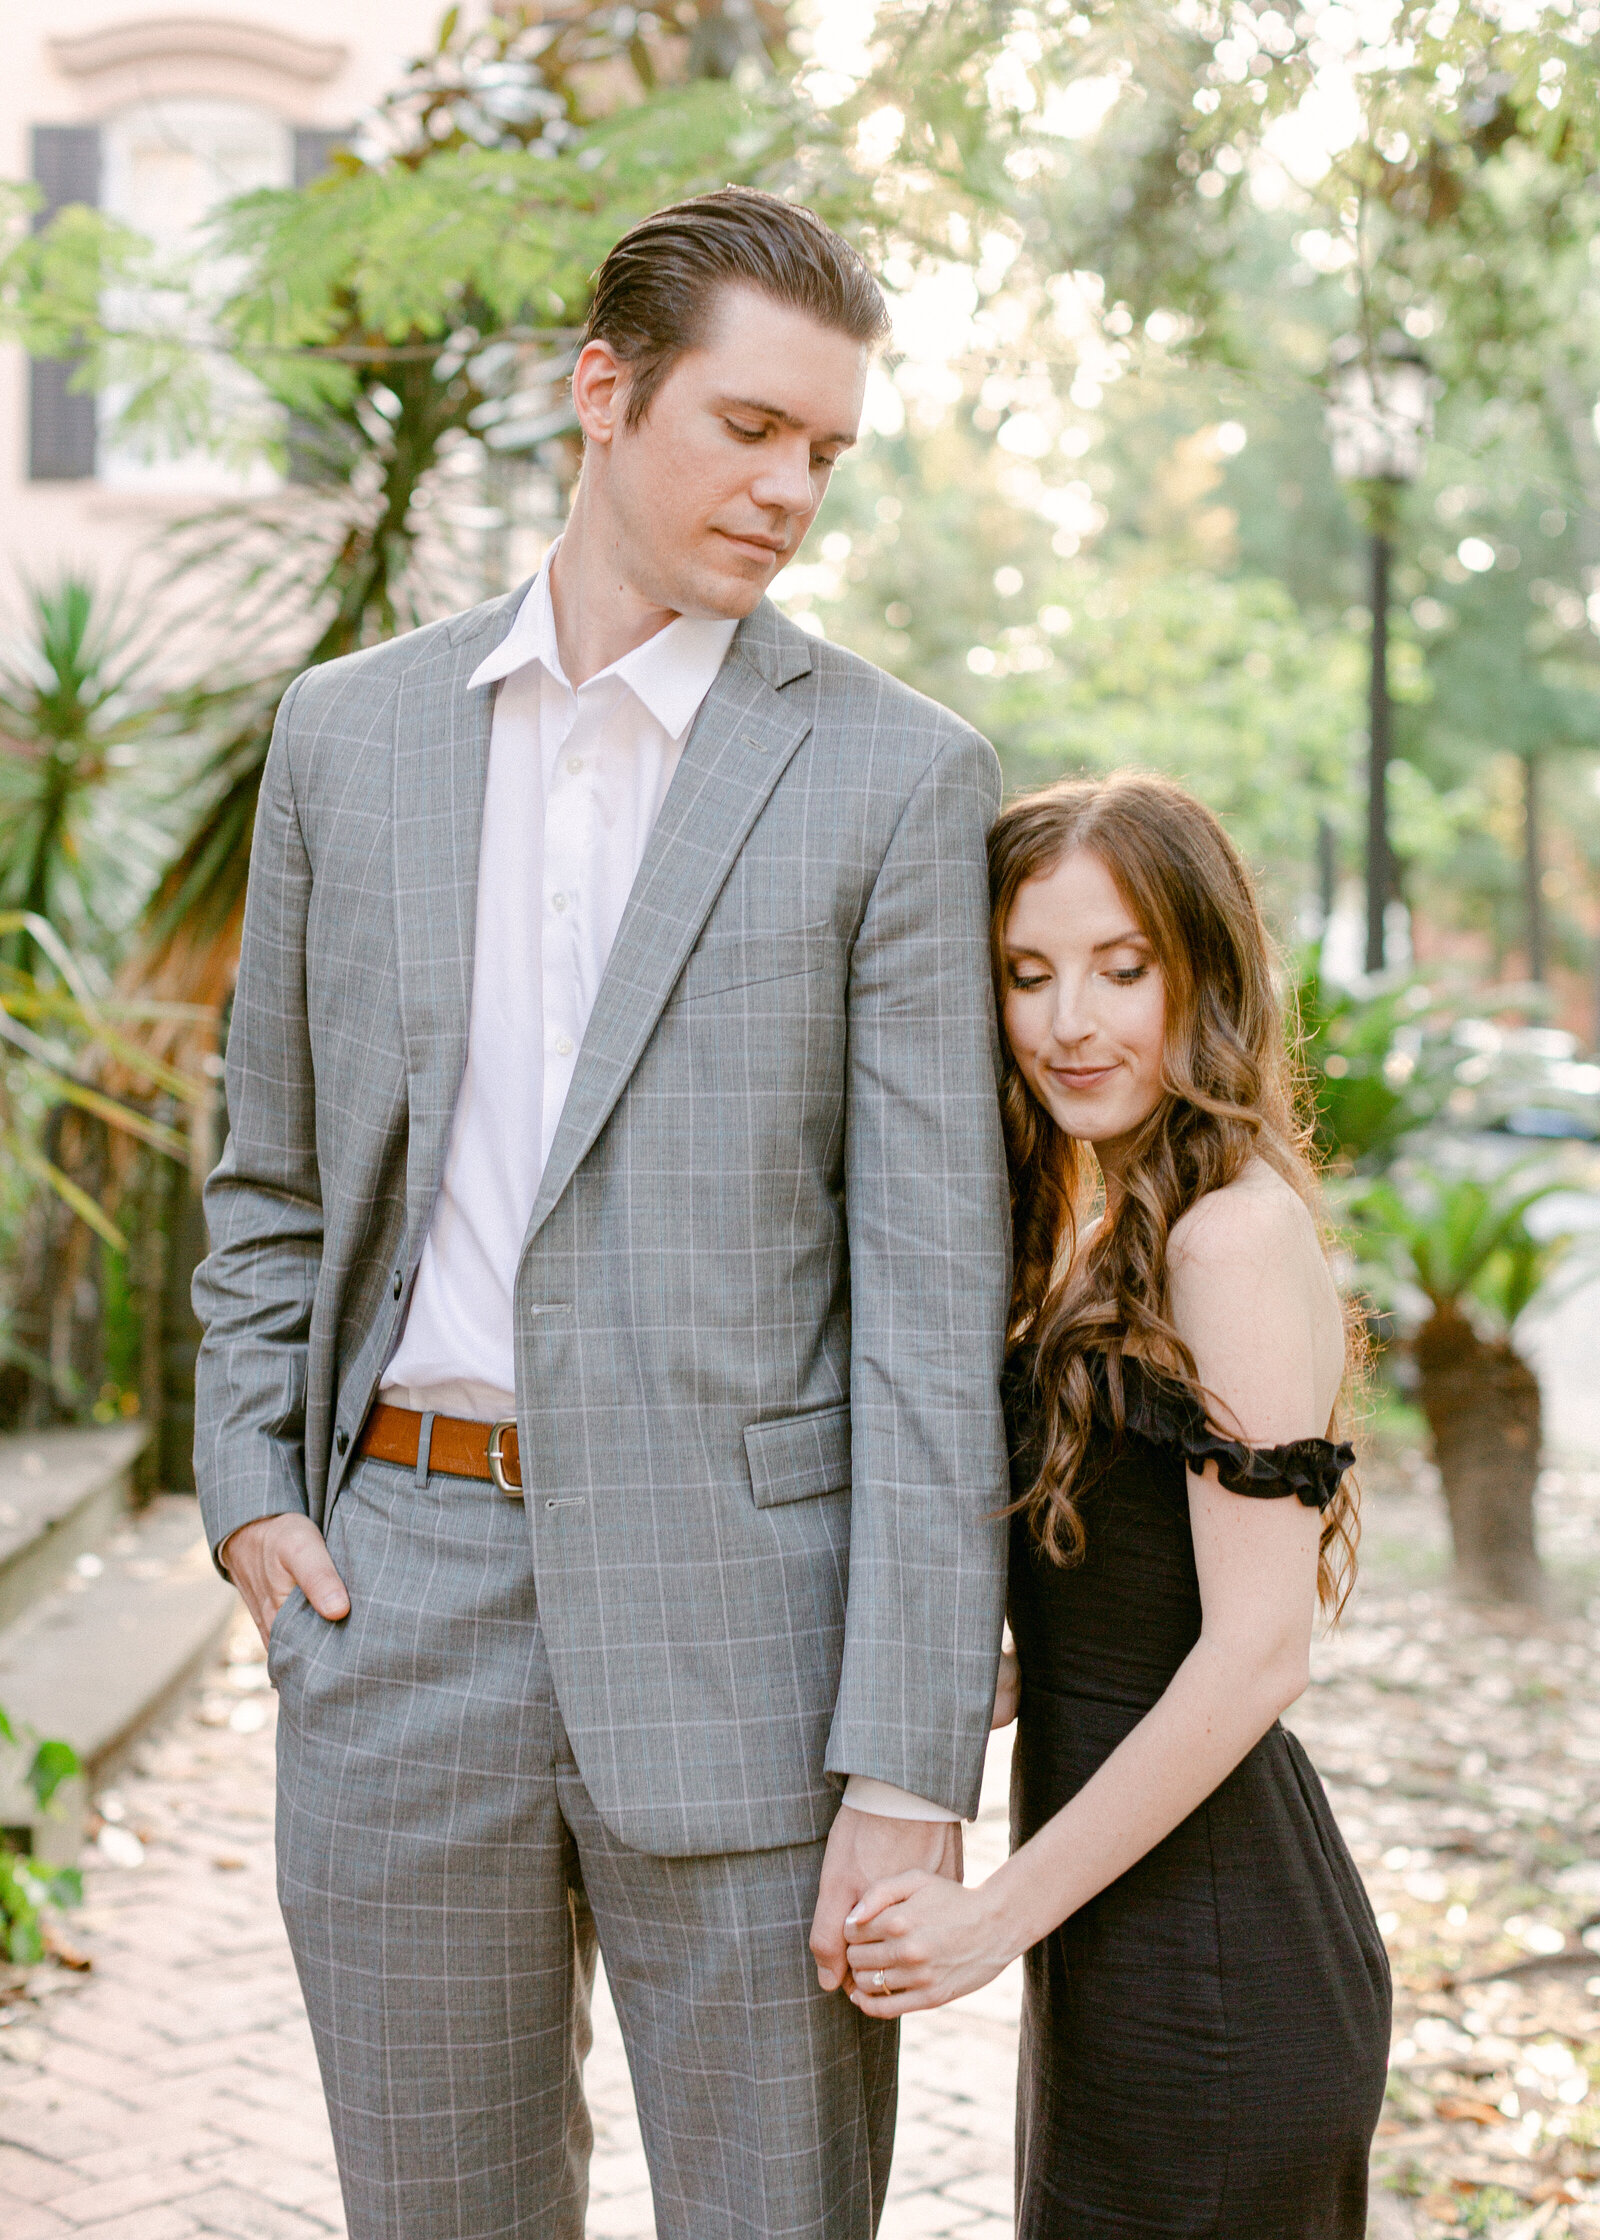 Hayley & Chris - Savannah Ga Engagement - Torianna Brooke Portraiture166